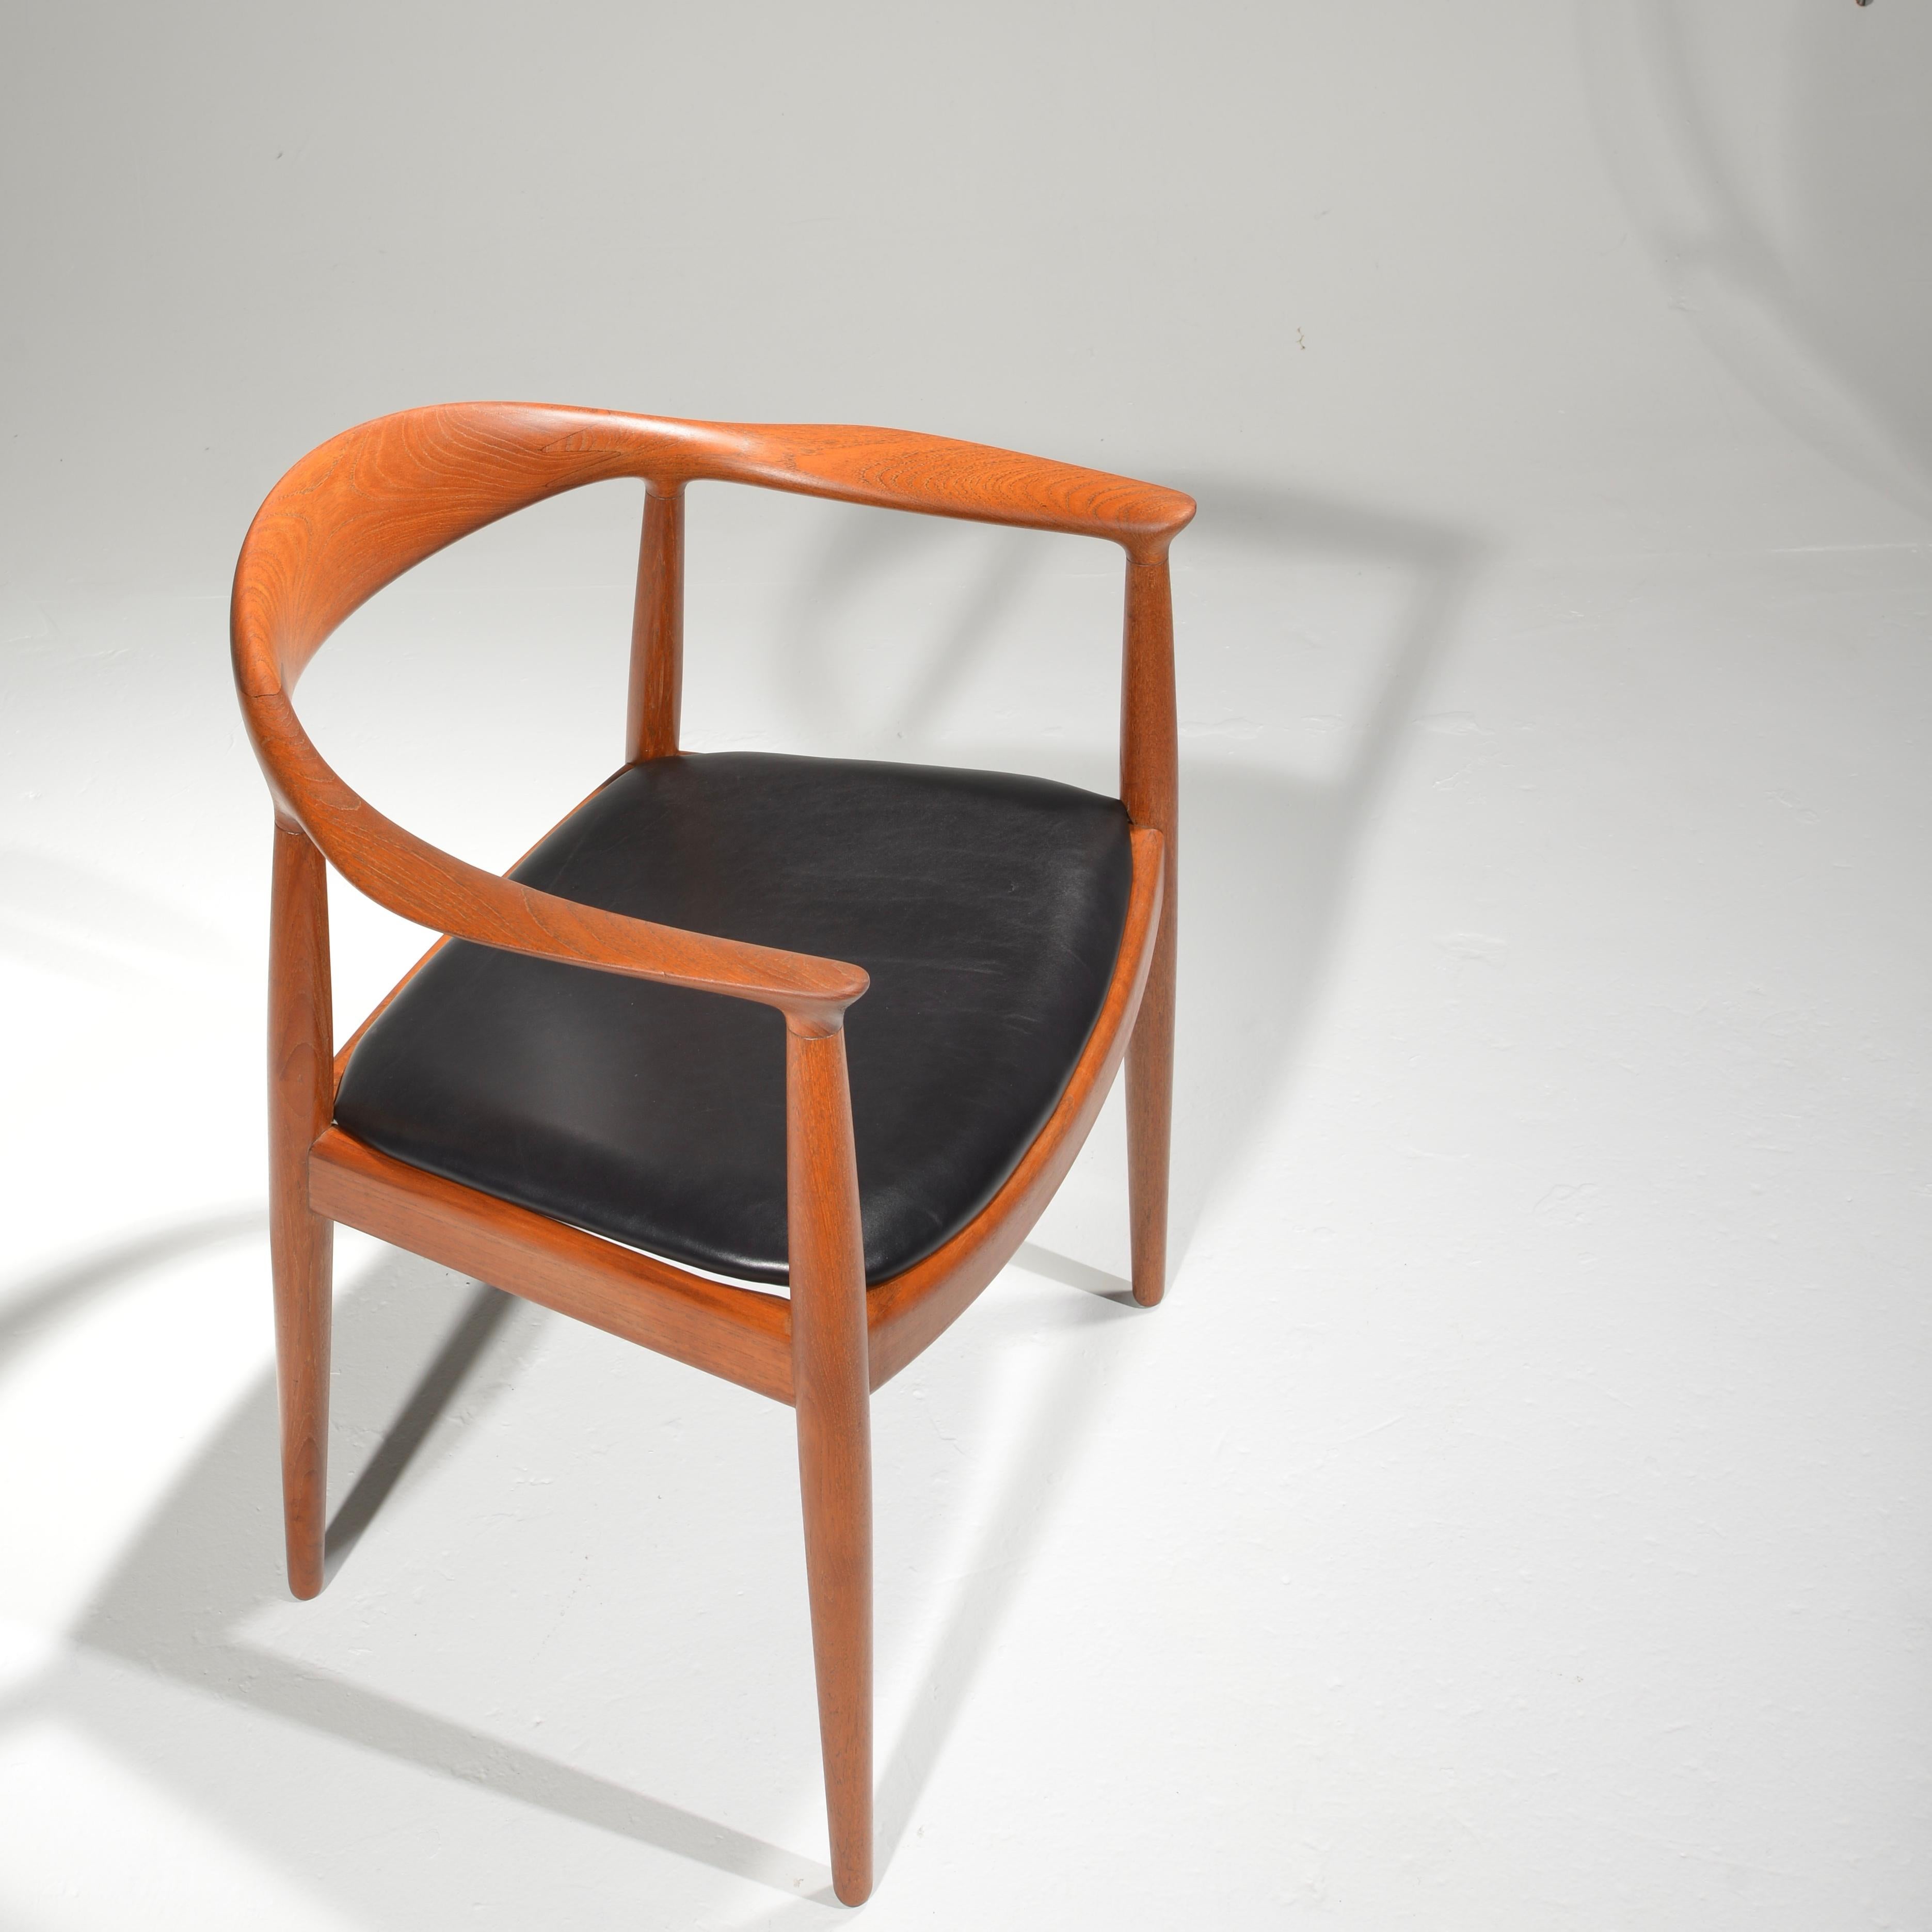 5 Hans Wegner for Johannes Hansen JH-503 Chairs in Teak and Leather For Sale 5